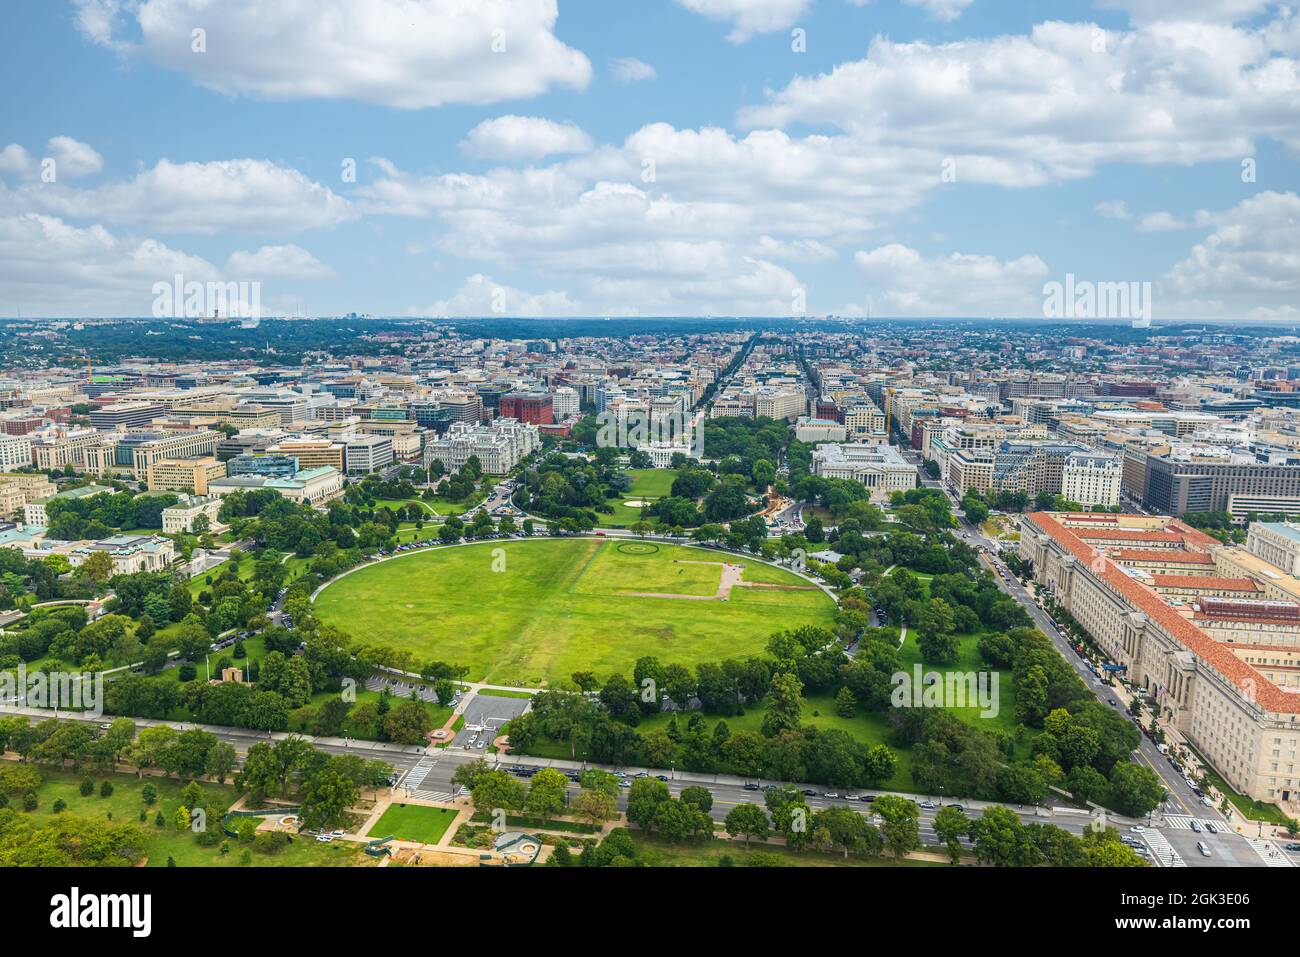 White House seen from inside Washington Monument in Washington, D.C., USA Stock Photo